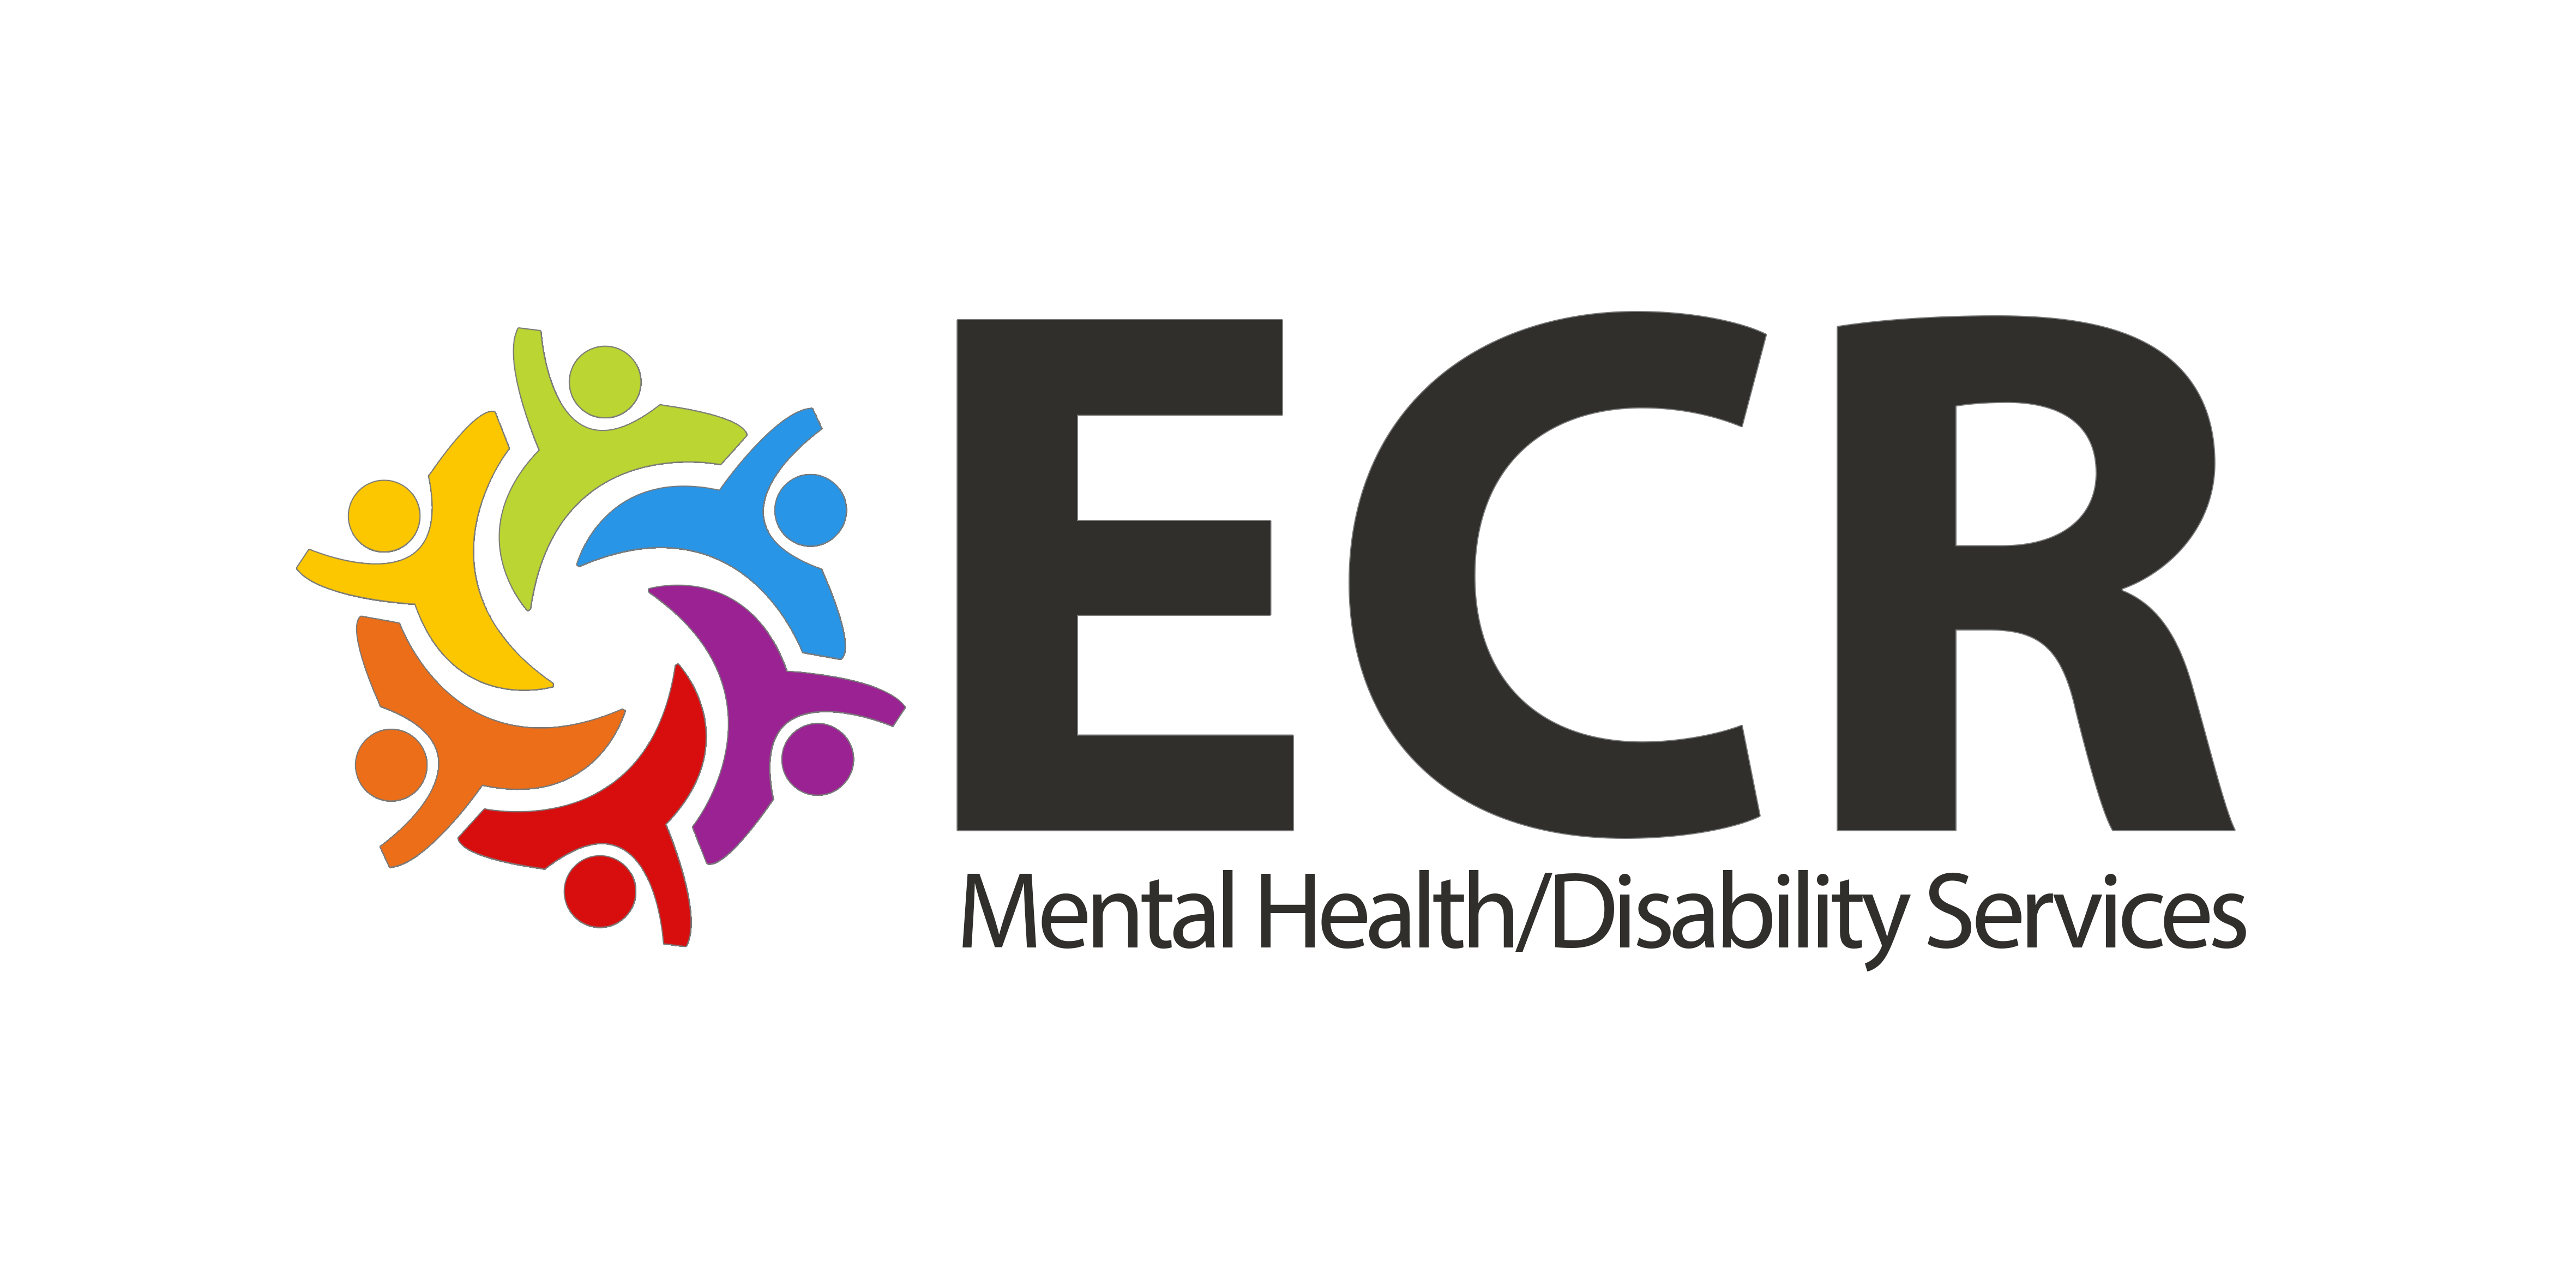 ECR Logo - ECR-Mental Health&Disability Services Logo - CommUnity